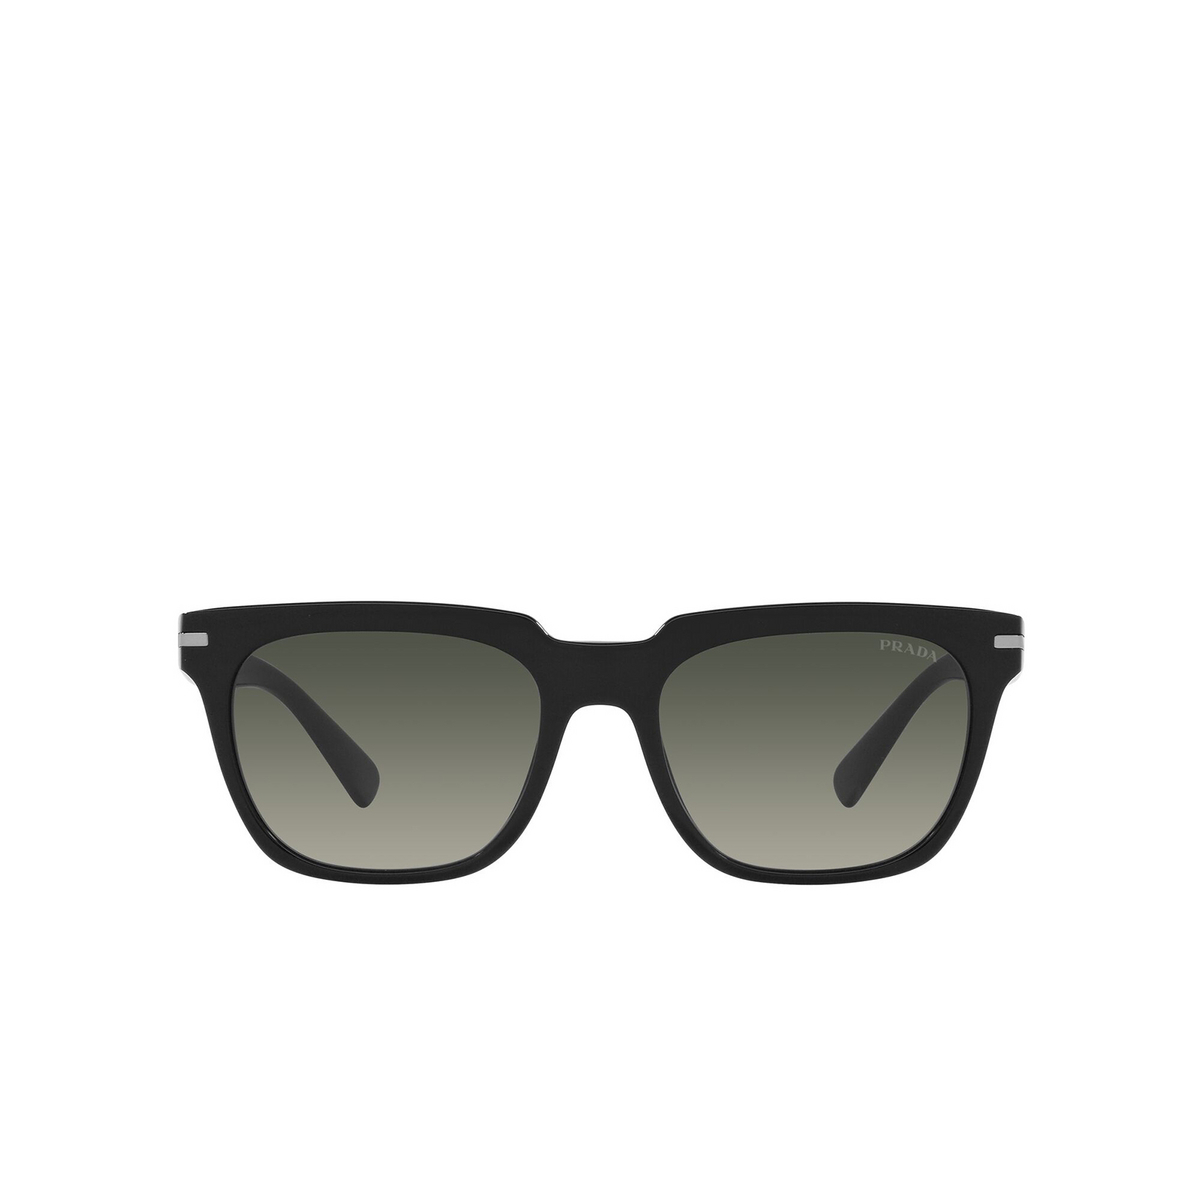 Prada® Square Sunglasses: PR 04YS color Black 1AB2D0 - front view.